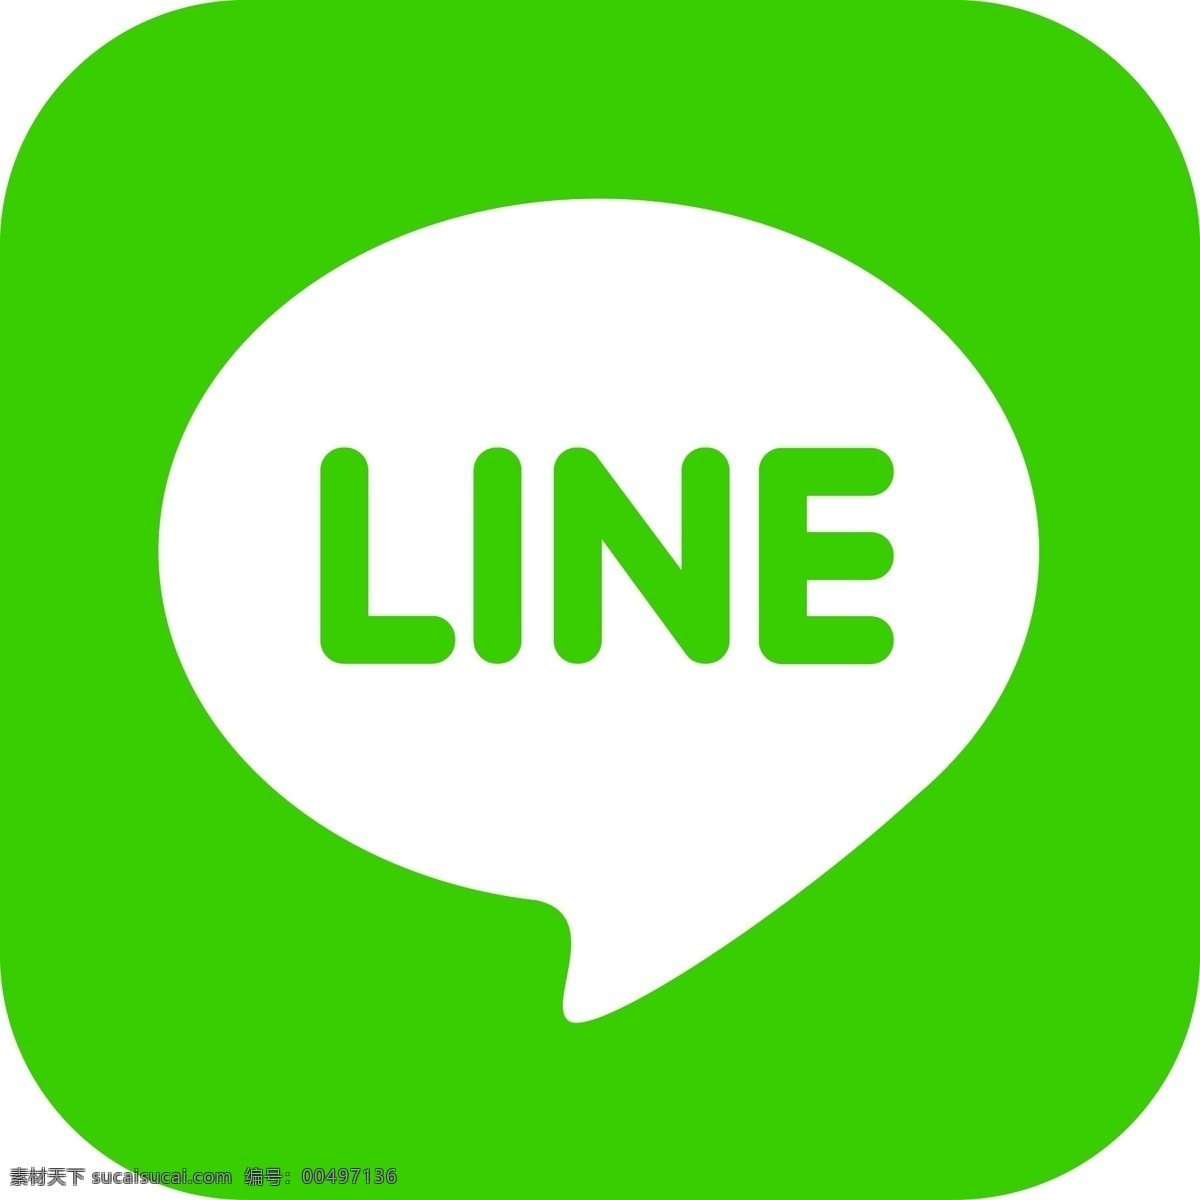 line 标志 即时通讯 软件 即时通讯软件 聊天软件 logo设计